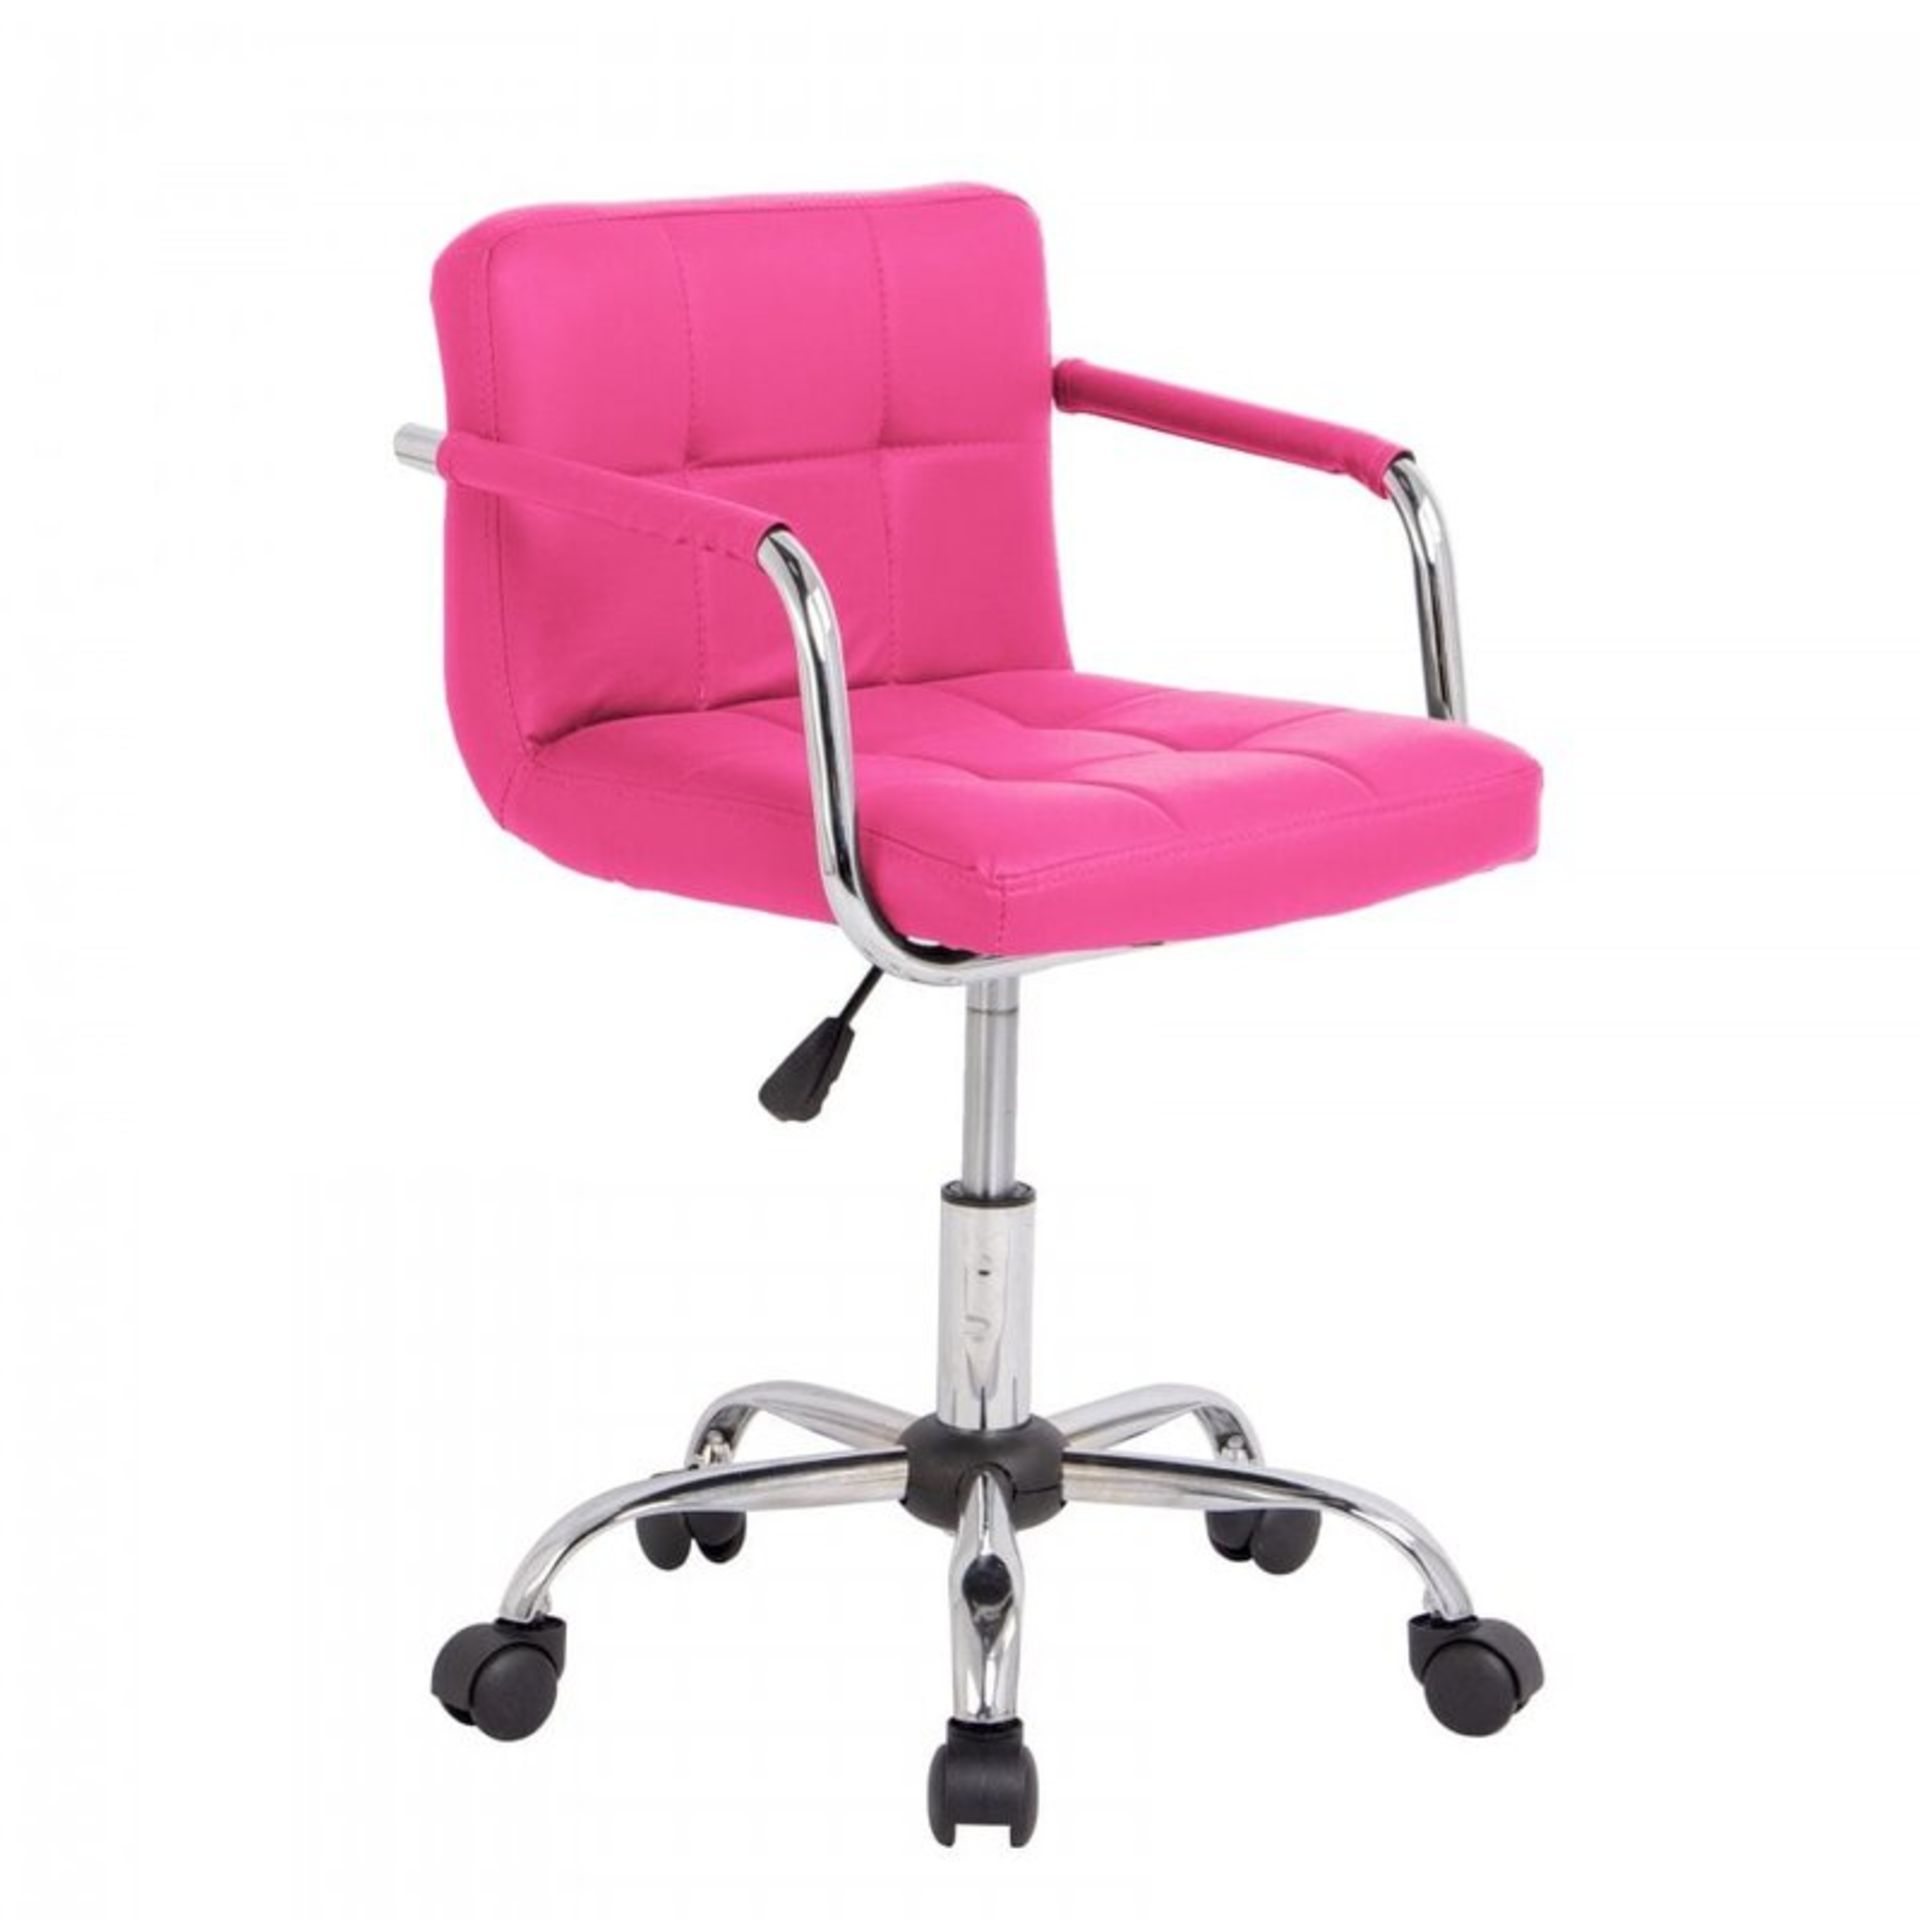 Cavero Desk Chair - RRP £129.99